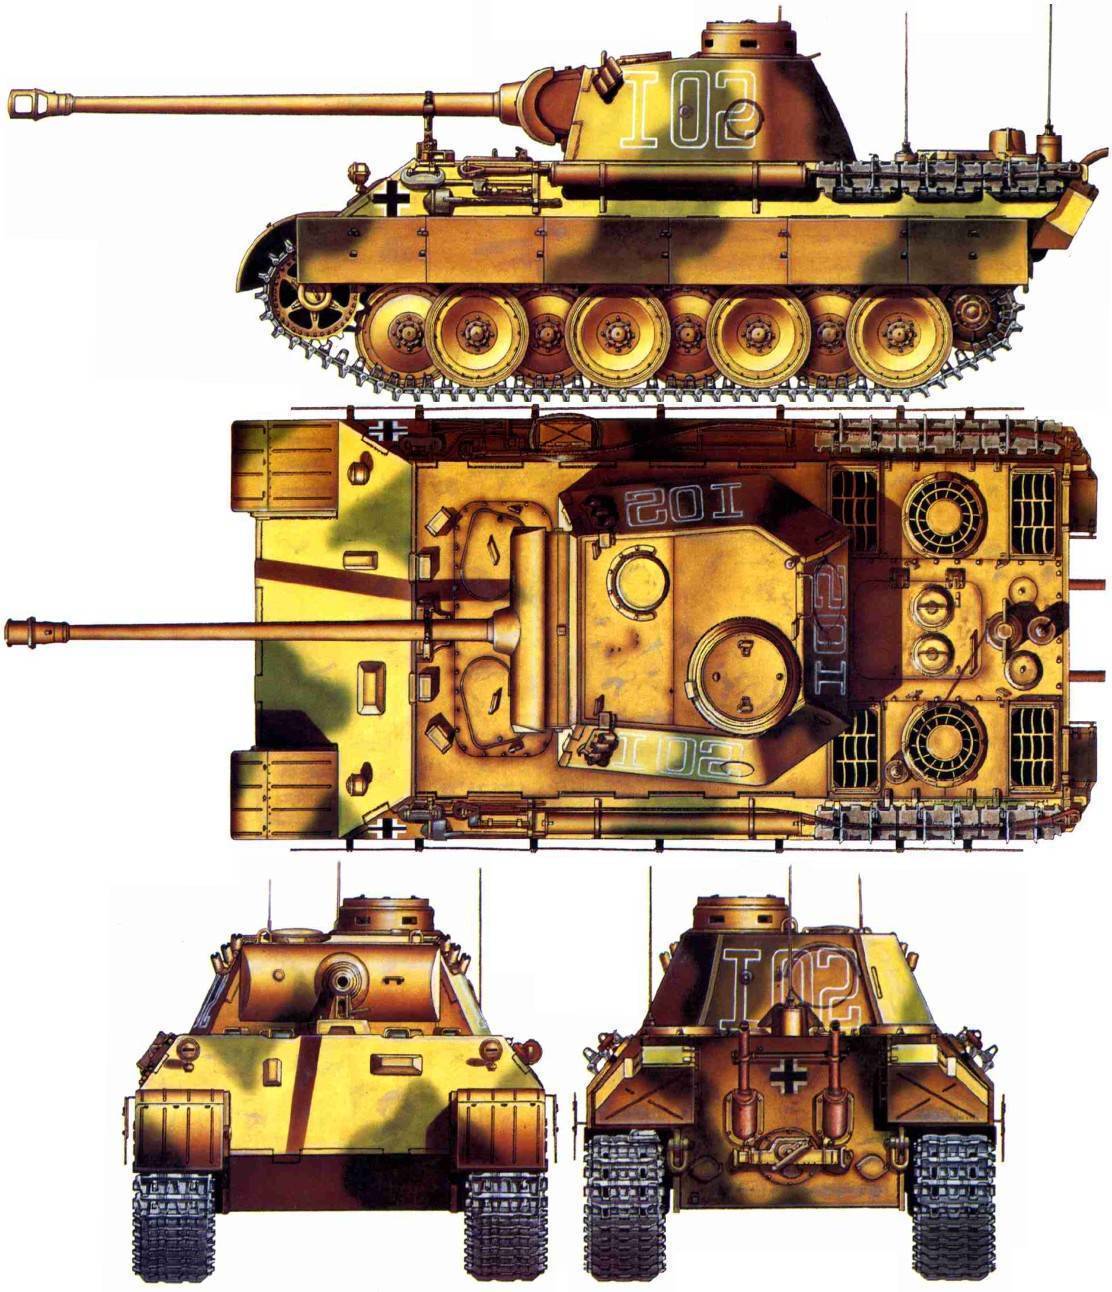 Panther mit 8,8 cm l/71 - обзор, гайд, вики, советы для среднего танка panther mit 8,8 cm l/71 из игры вот на веб-ресурсе wiki.wargaming.net